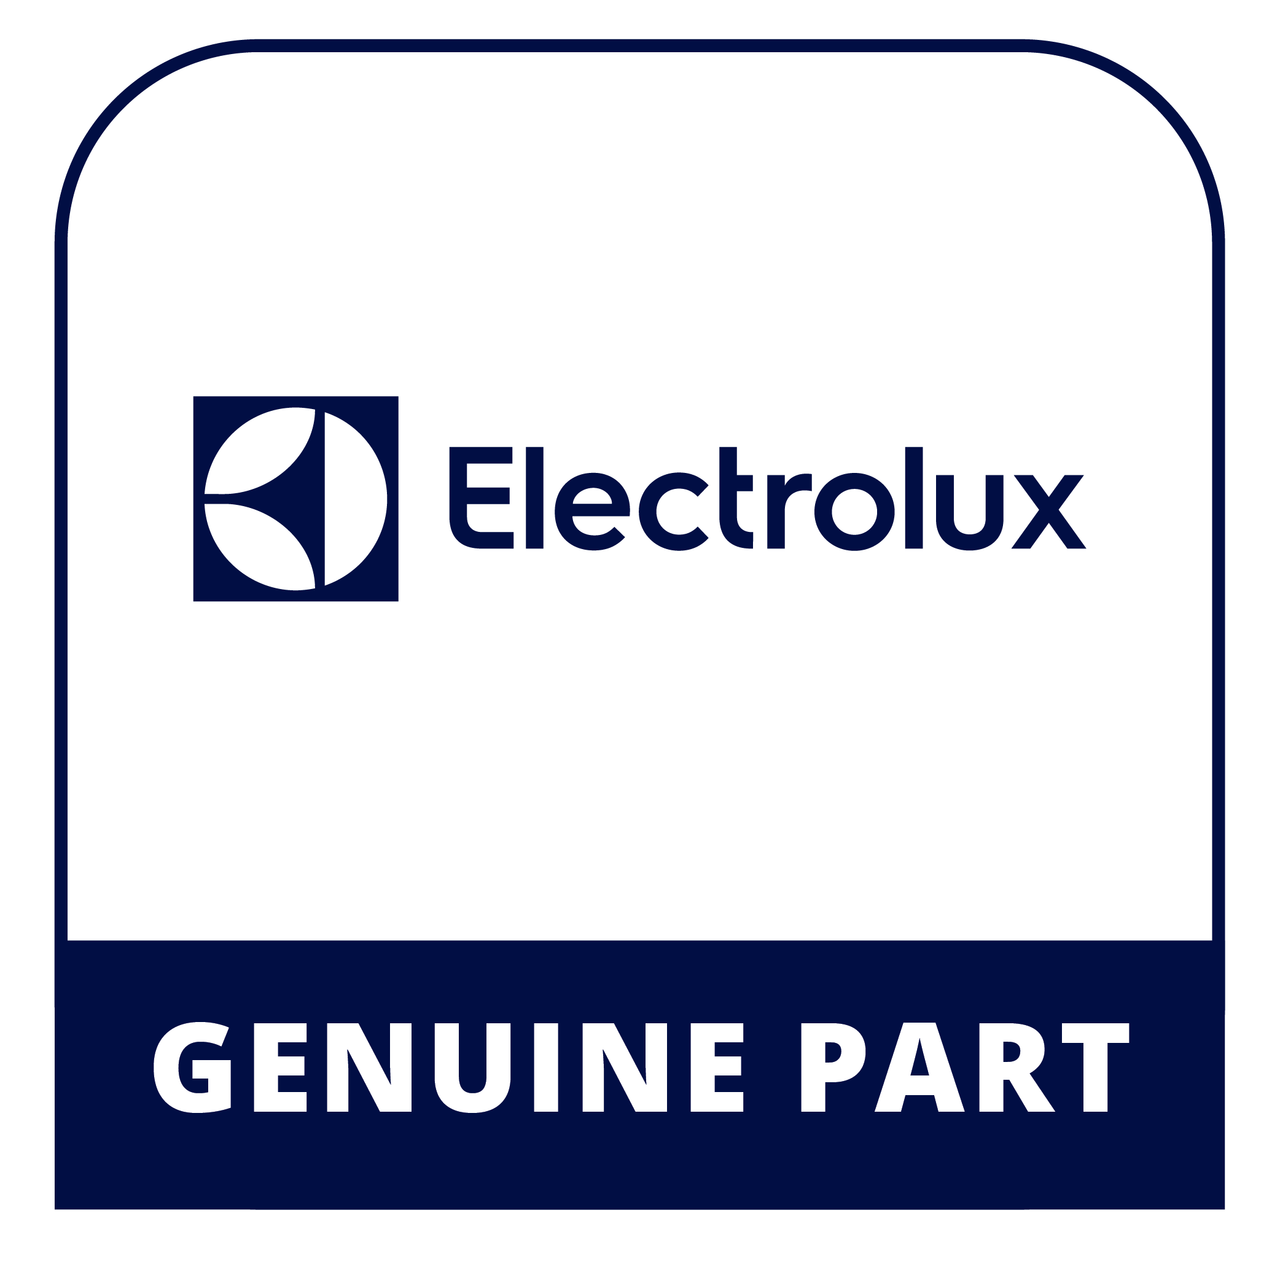 Frigidaire - Electrolux 5304490983 Power Cord - Genuine Electrolux Part